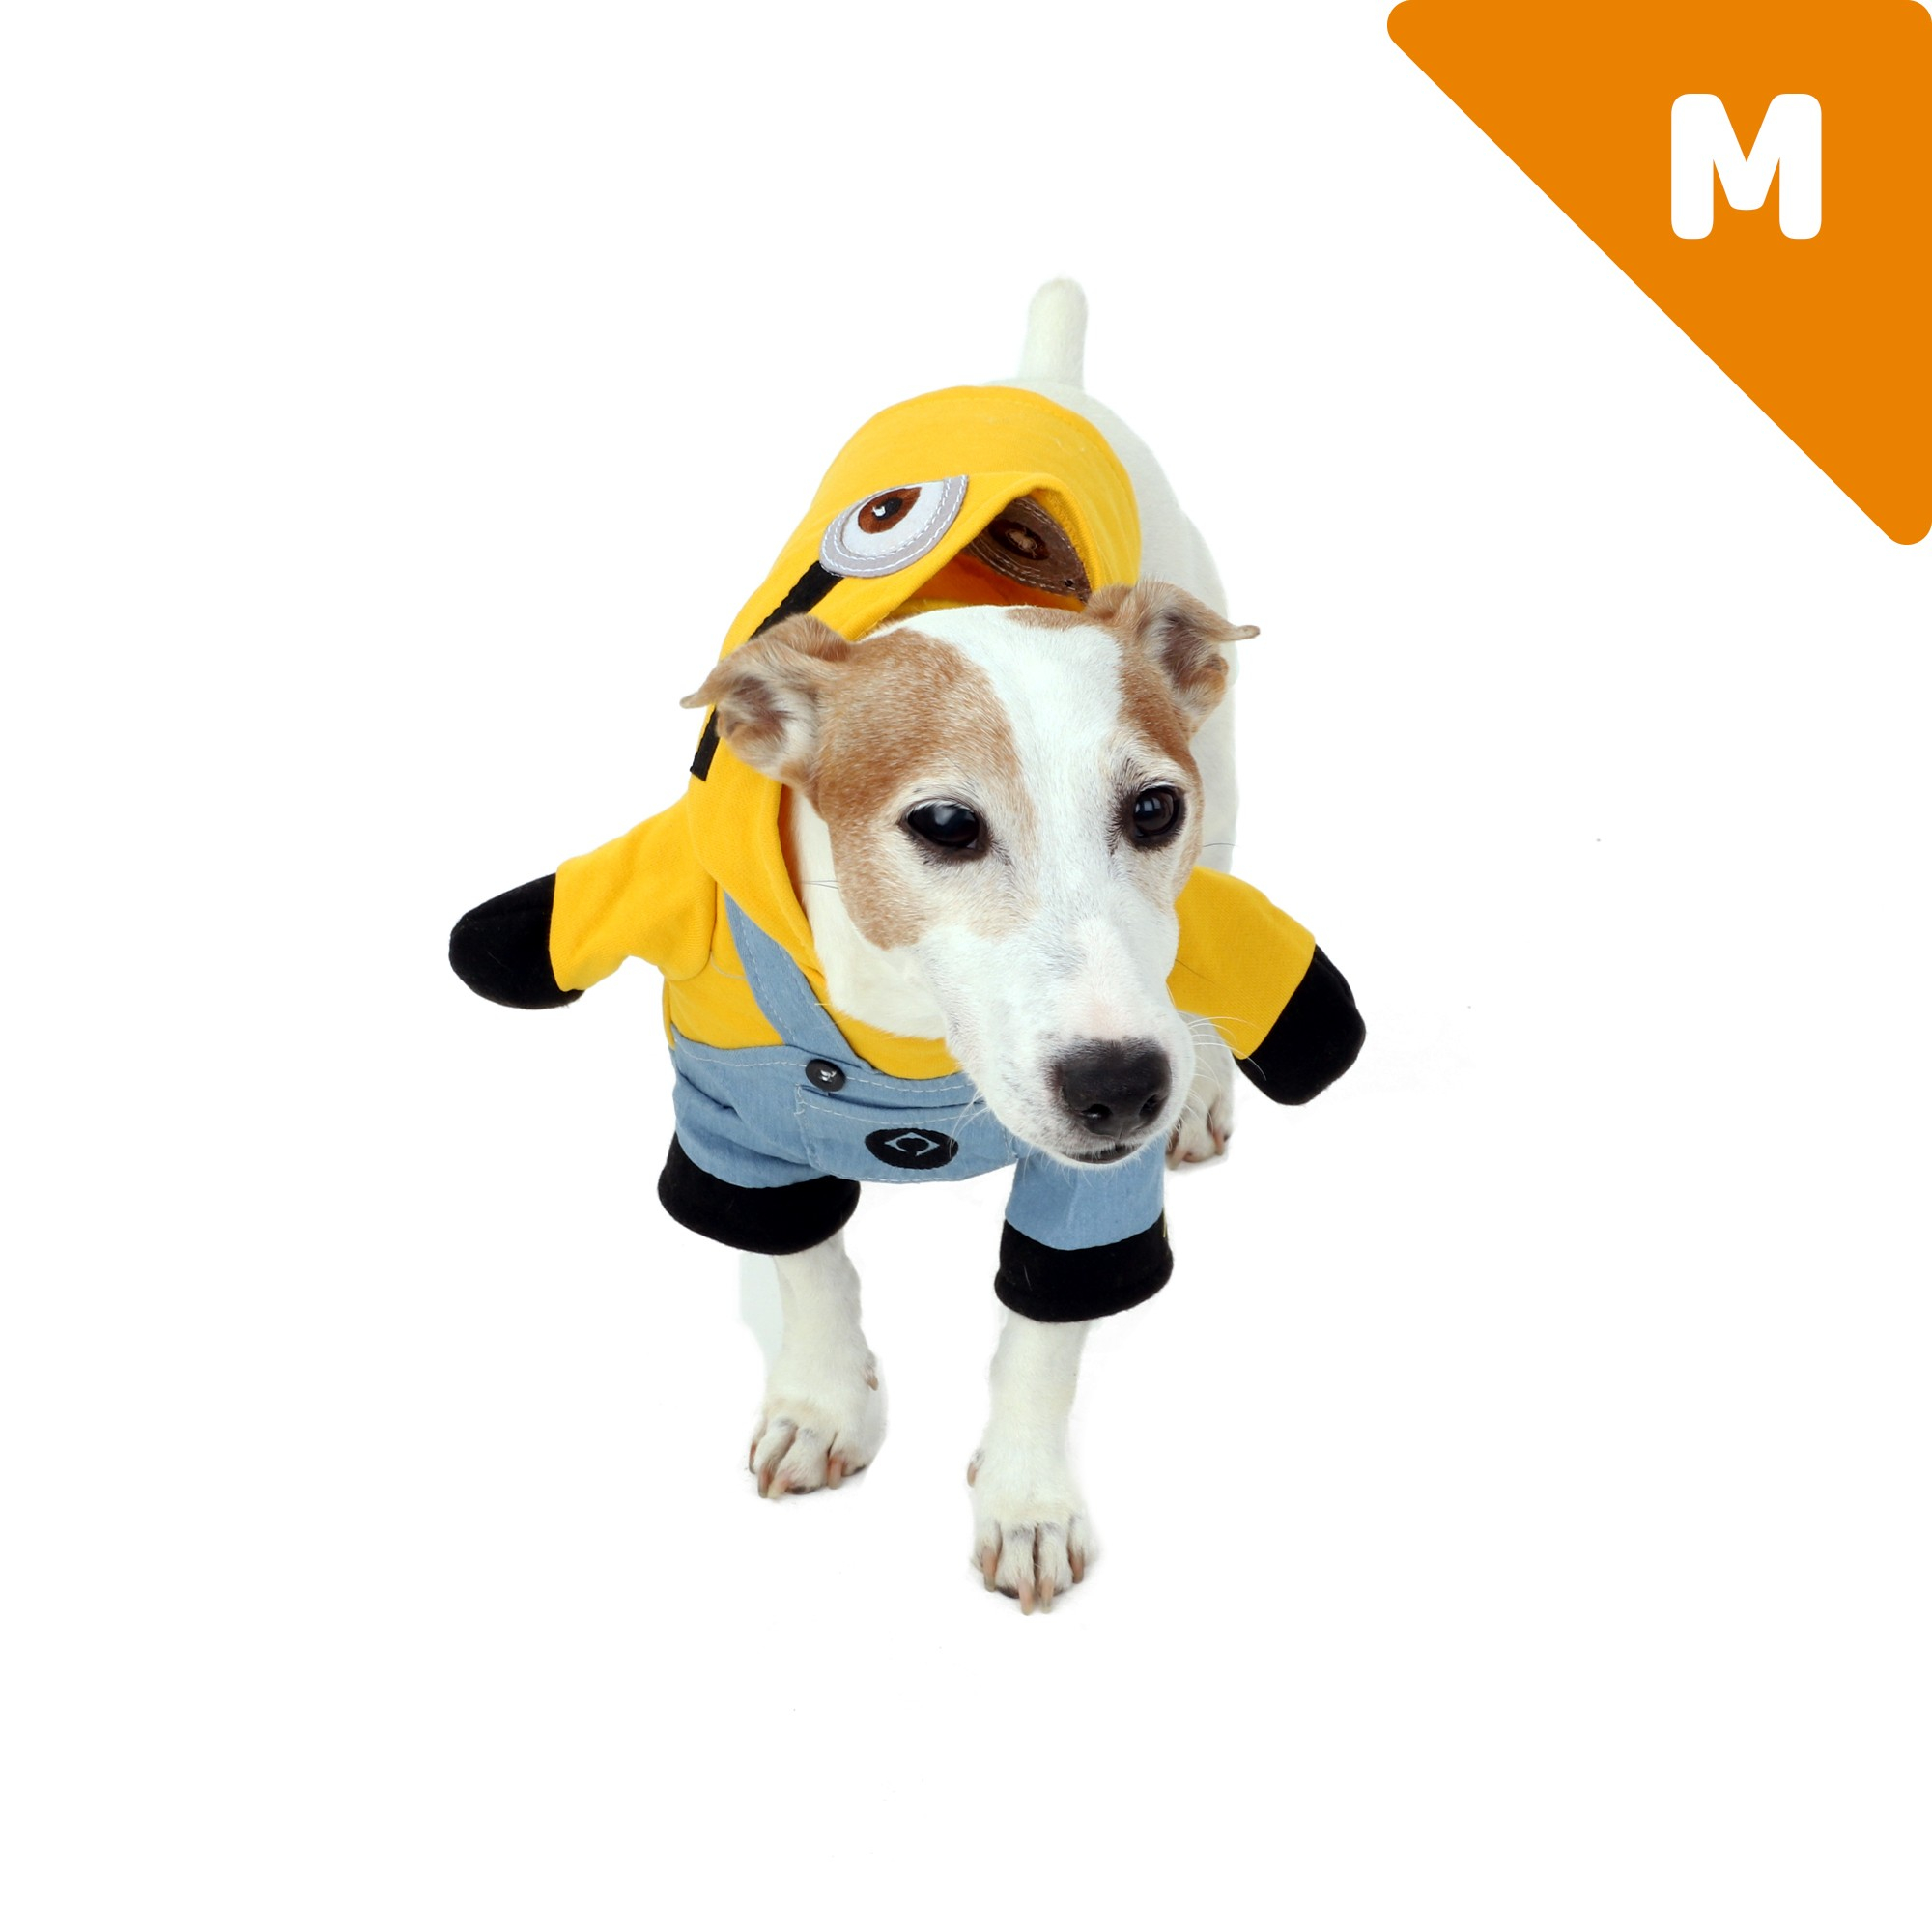 Disfraz de minion para perros Zolia Festive